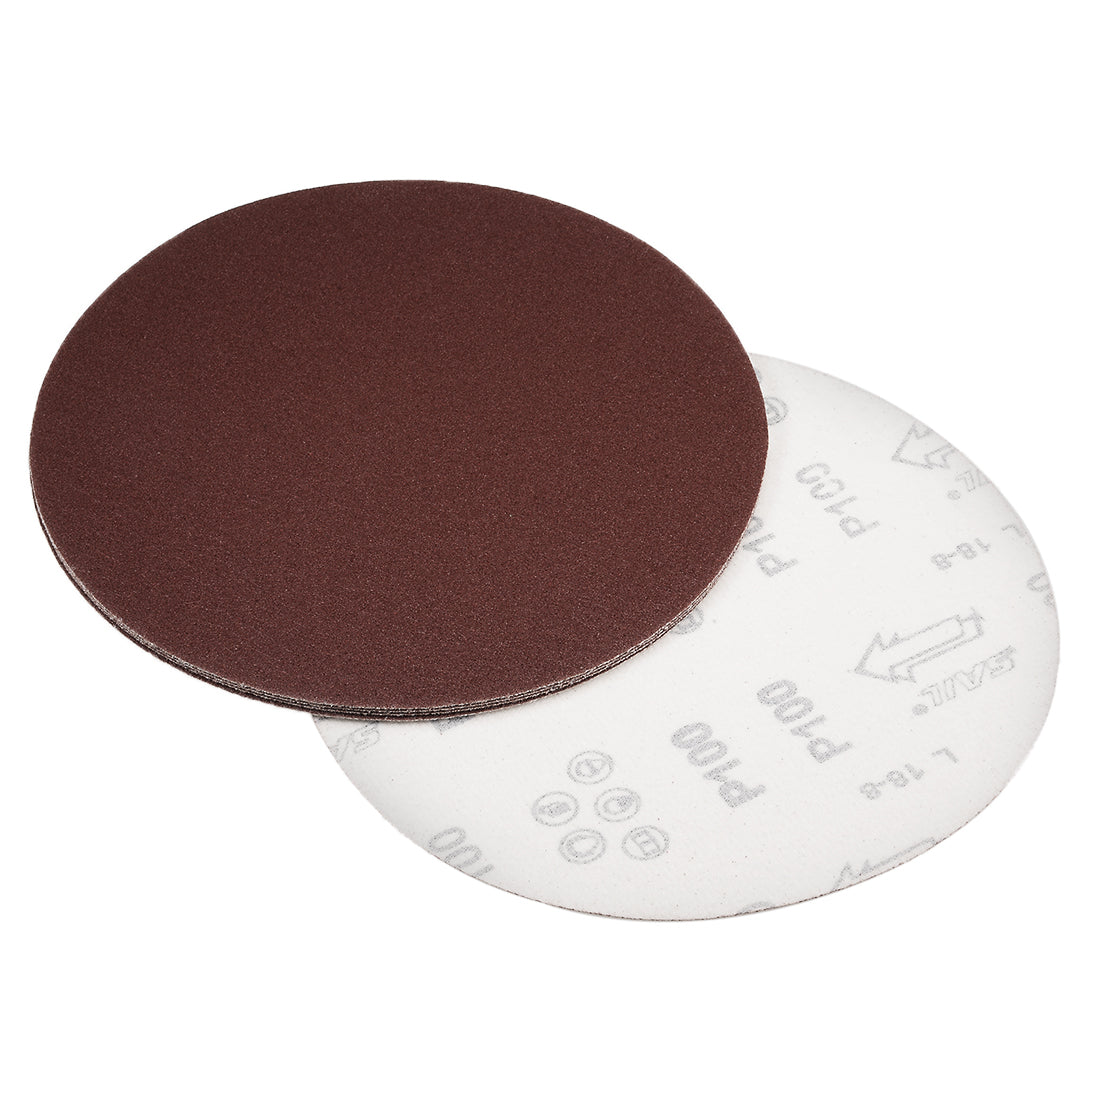 Uxcell Uxcell 8-inch Hook and Loop Sanding Discs, 800-Grits Aluminum Oxide Flocking Sandpaper for Random Orbital Sander 5pcs